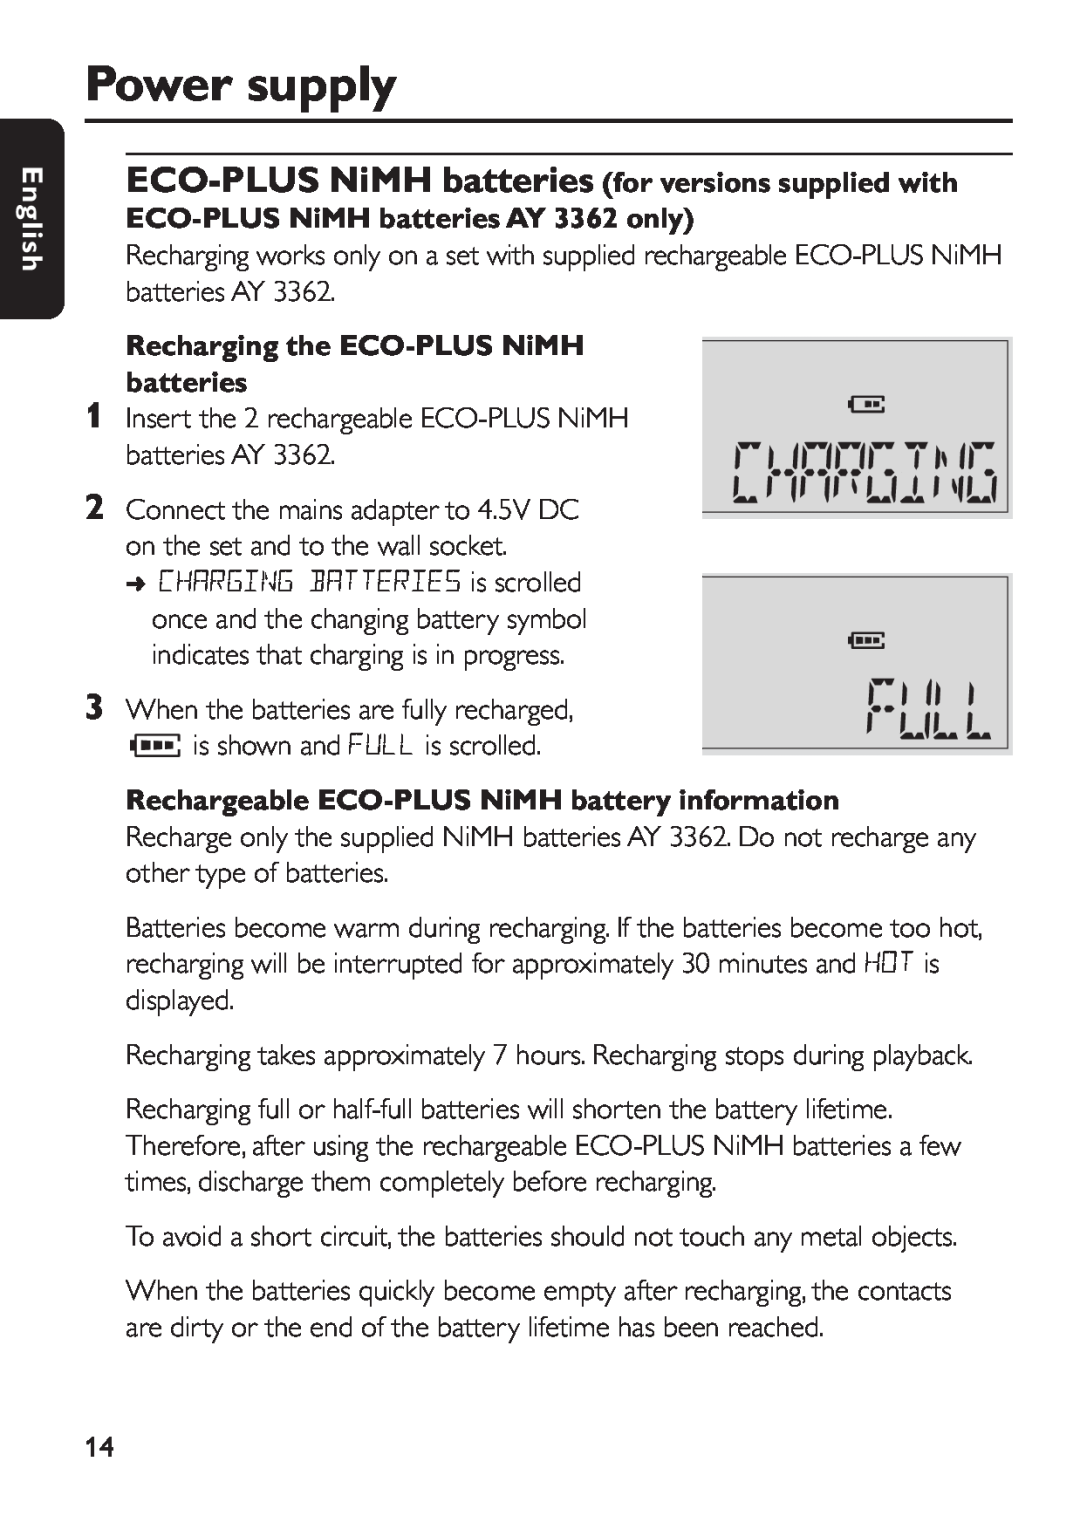 Philips EXP 501/00 Recharging the ECO-PLUS NiMH batteries, Rechargeable ECO-PLUS NiMH battery information, Power supply 